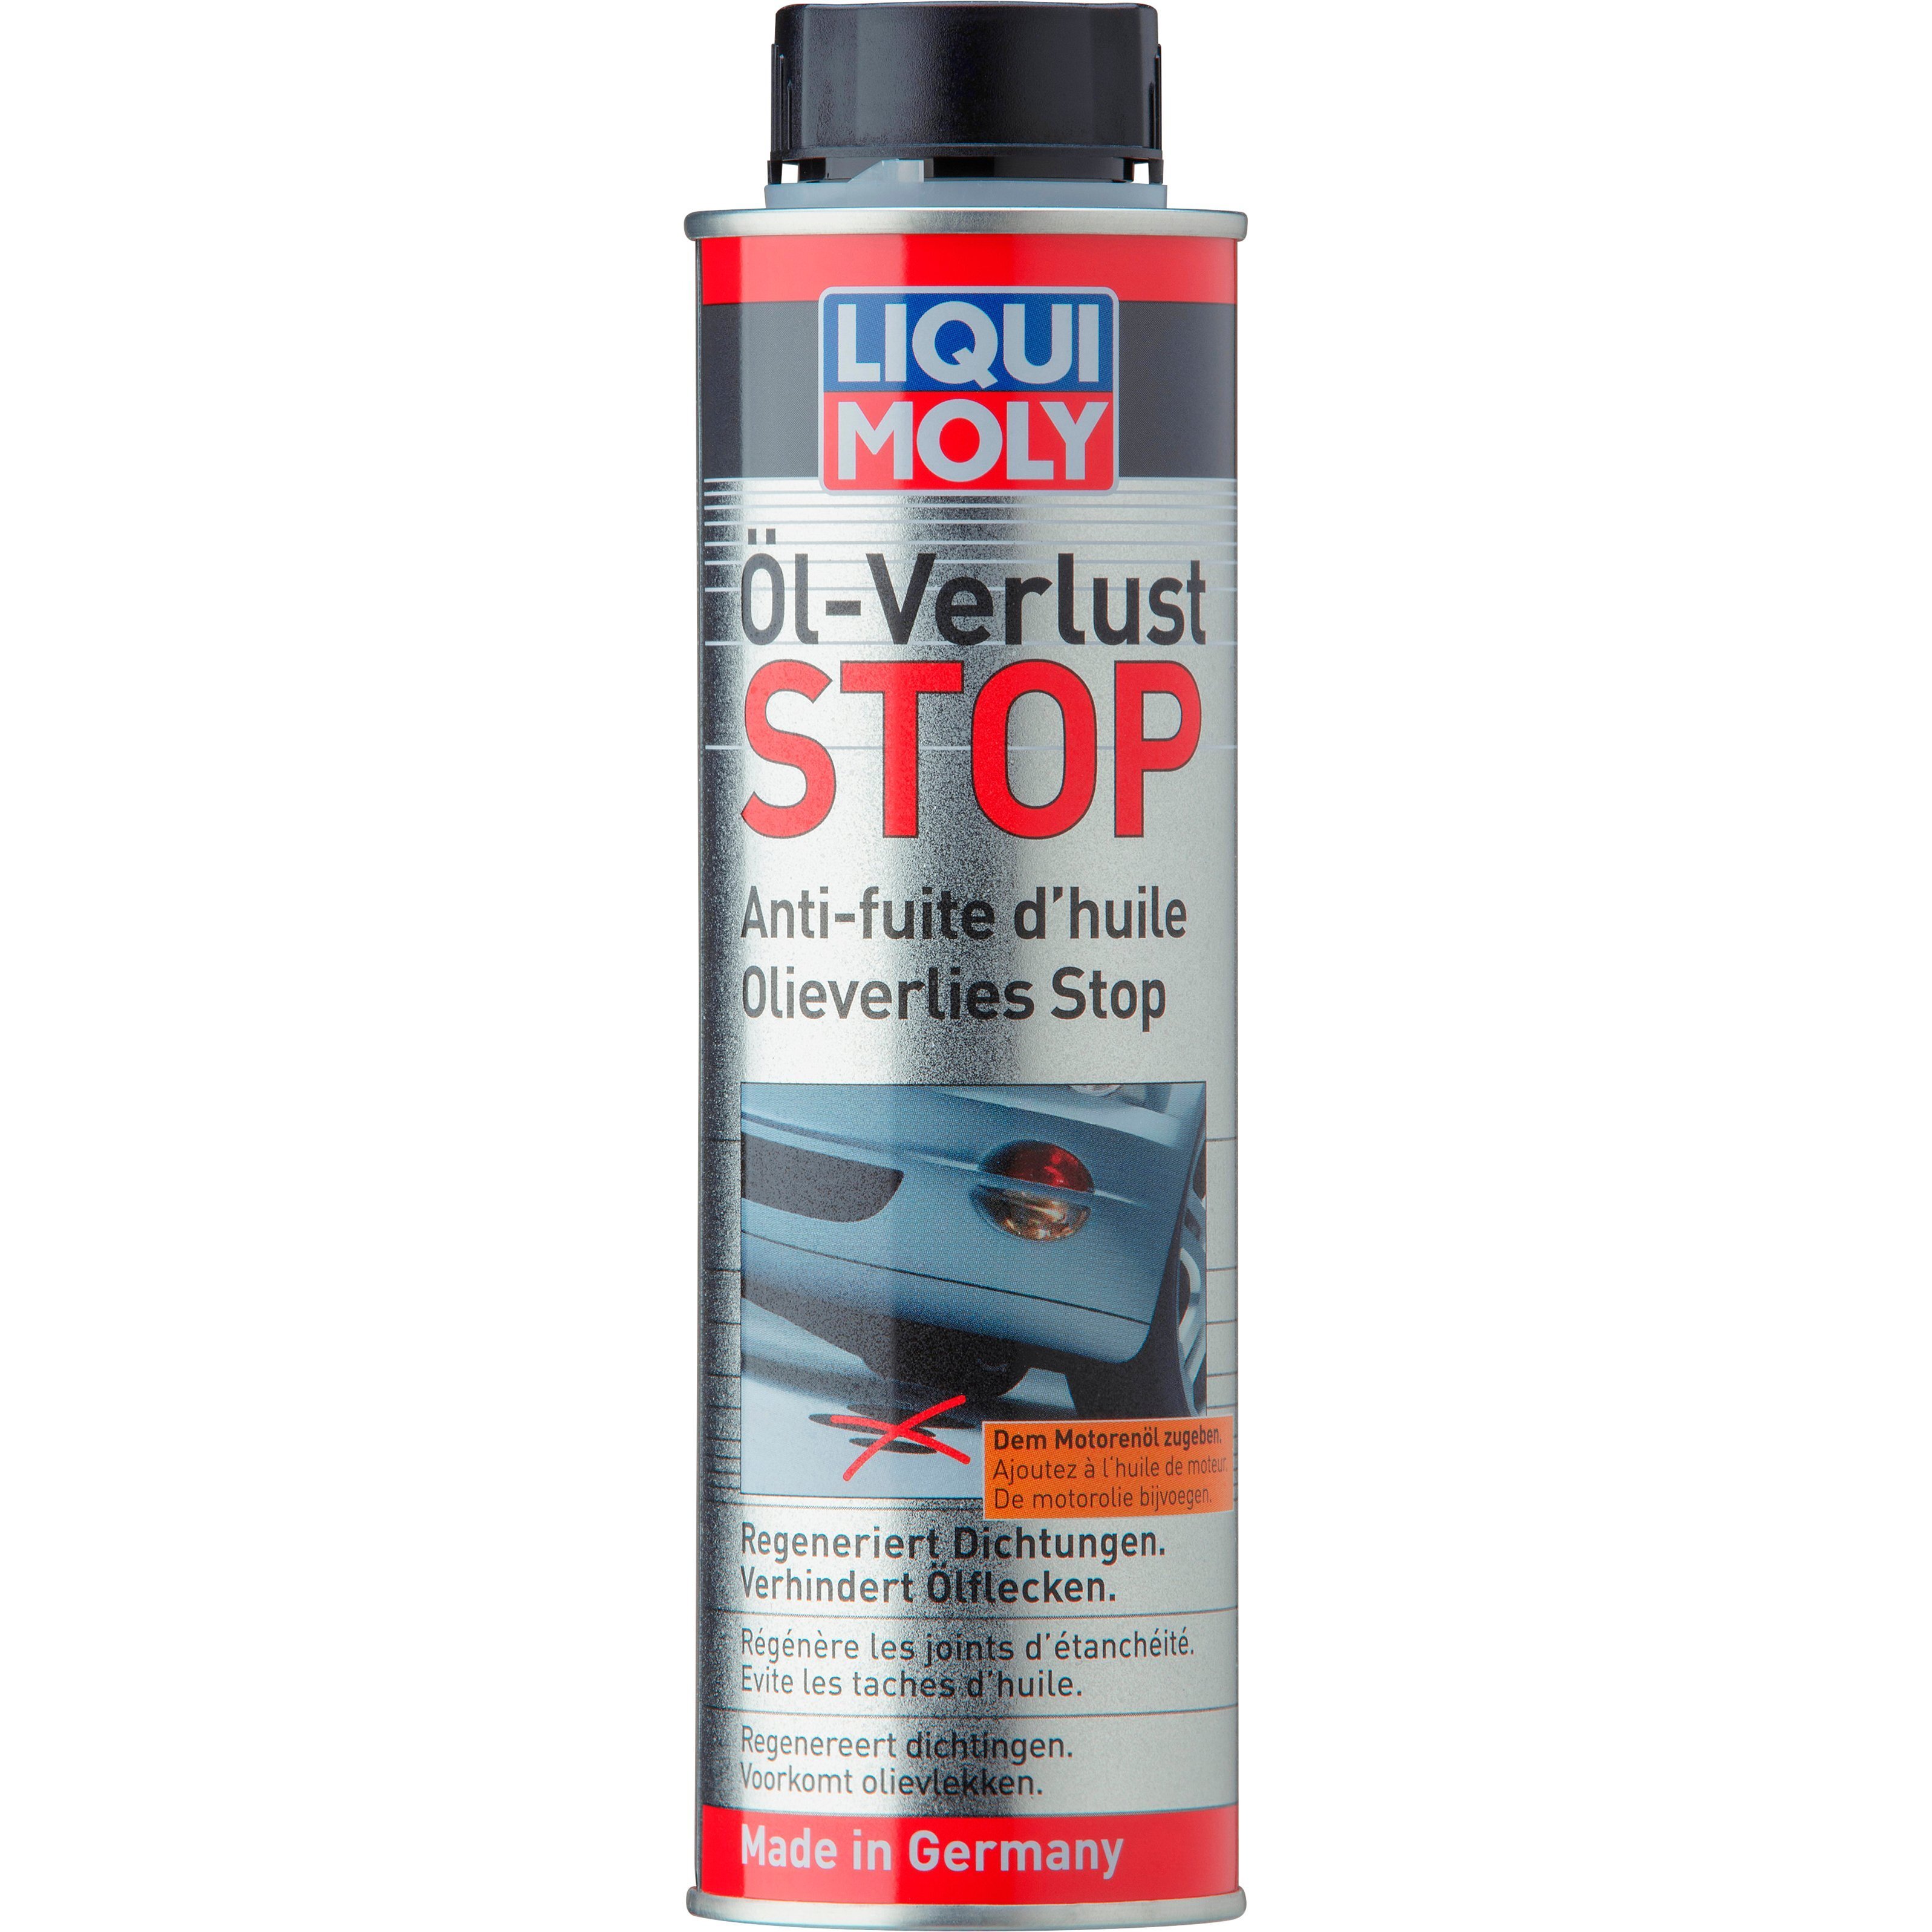 Средство Liqui Moly для прекращения утечки моторного масла Oil-Verlust-Stop 0,3л (4100420019951) фото 1